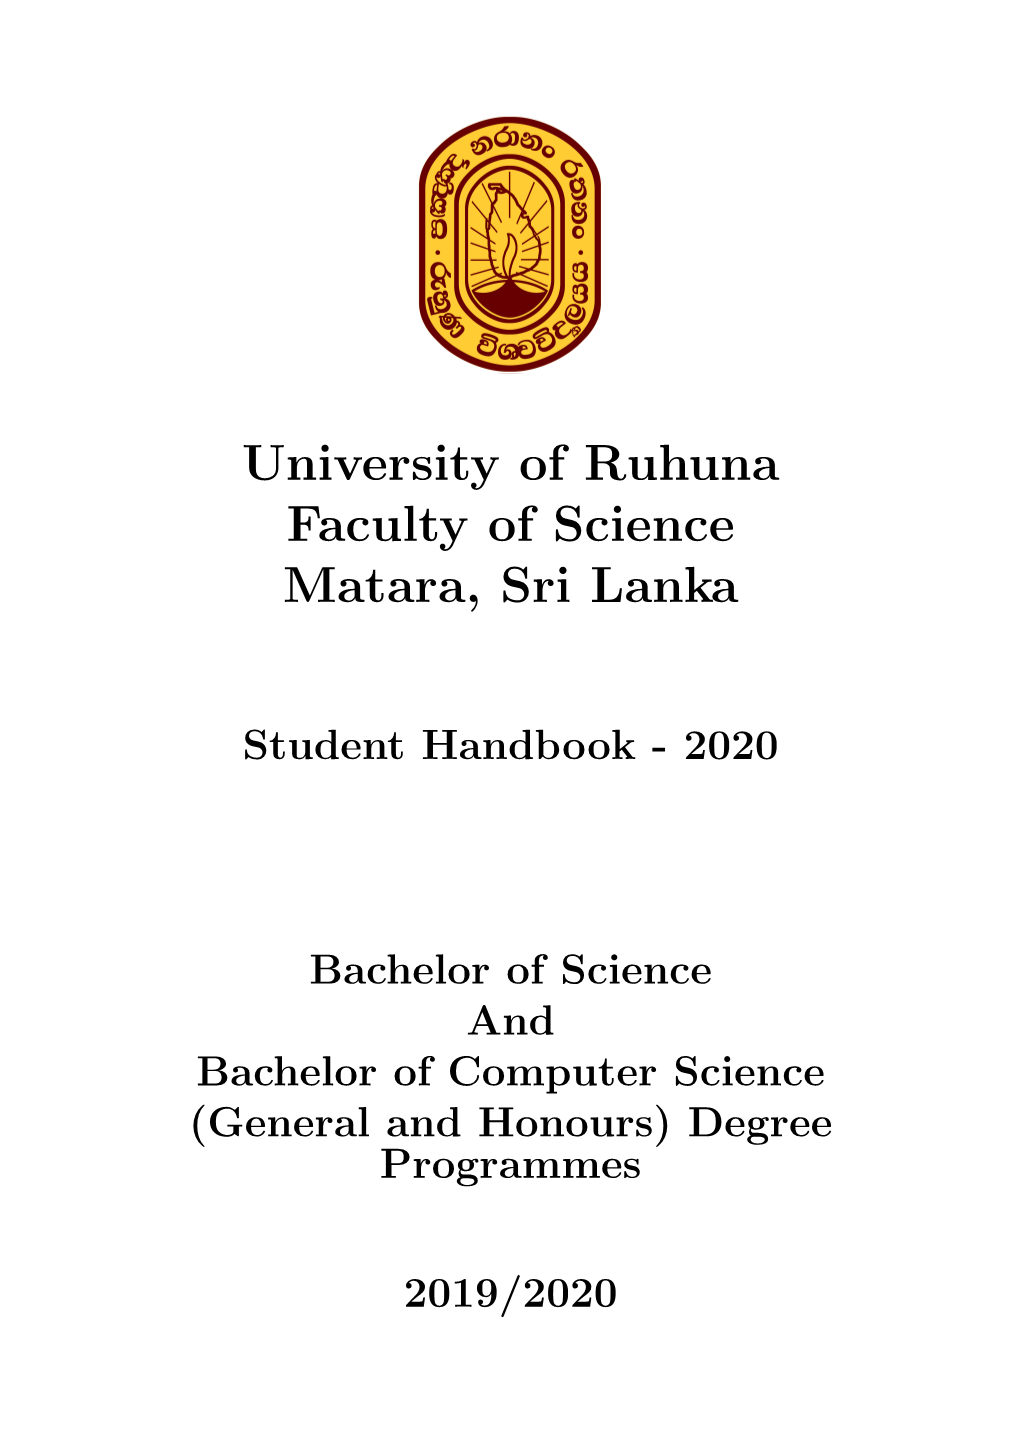 University of Ruhuna Faculty of Science Matara, Sri Lanka